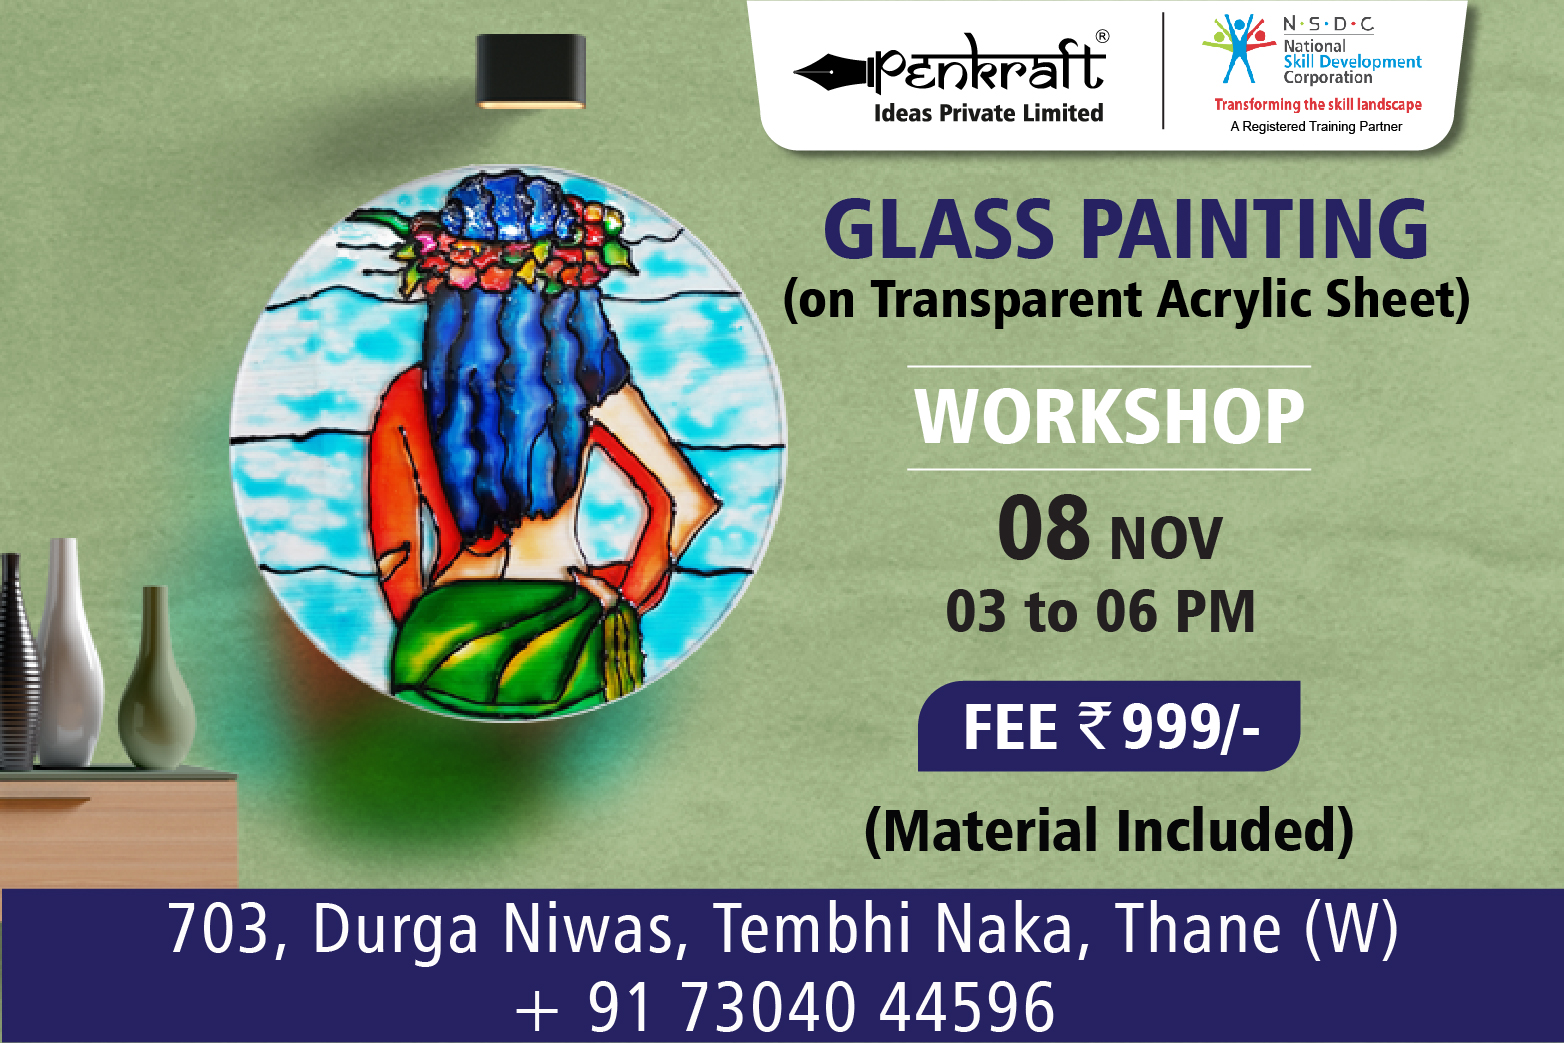 Penkraft Glass Painting on Transparent Acrylic Sheet Workshop!